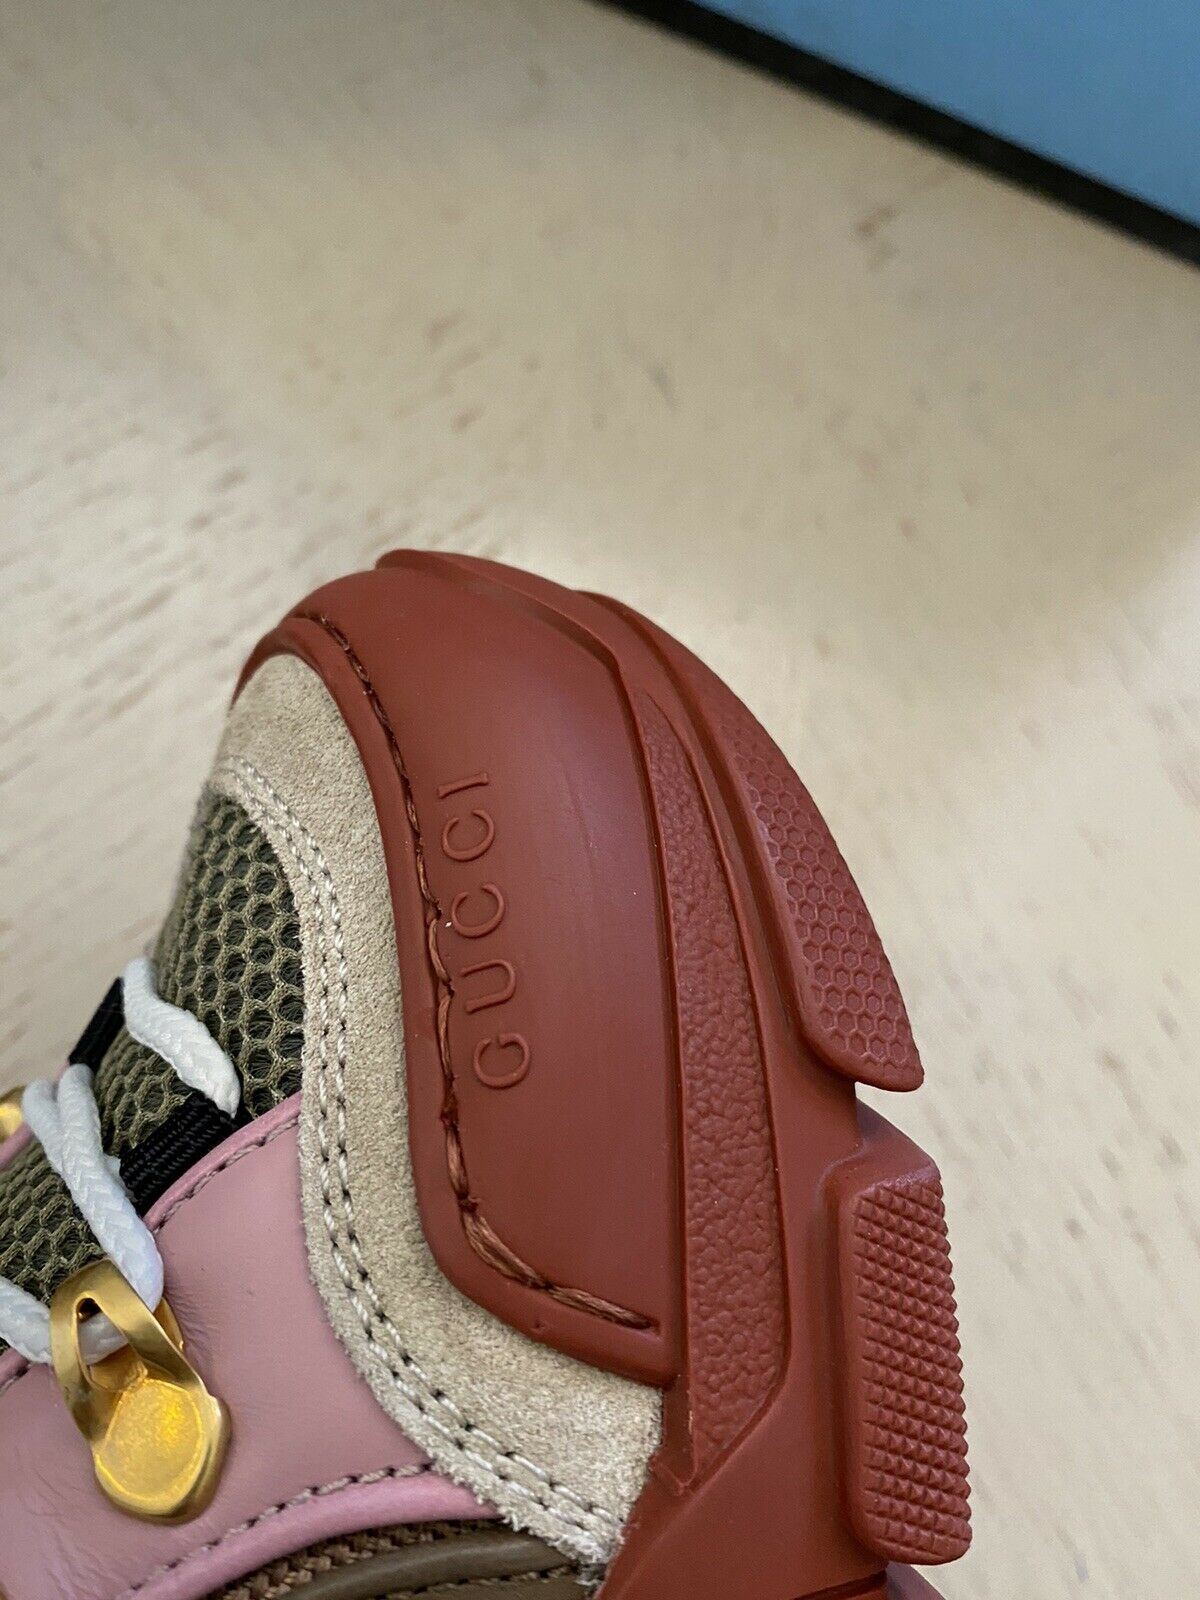 NIB $1300 Gucci Women’s Sneakers Shoes Military Green/Red/Pink 5 US/35 Eu